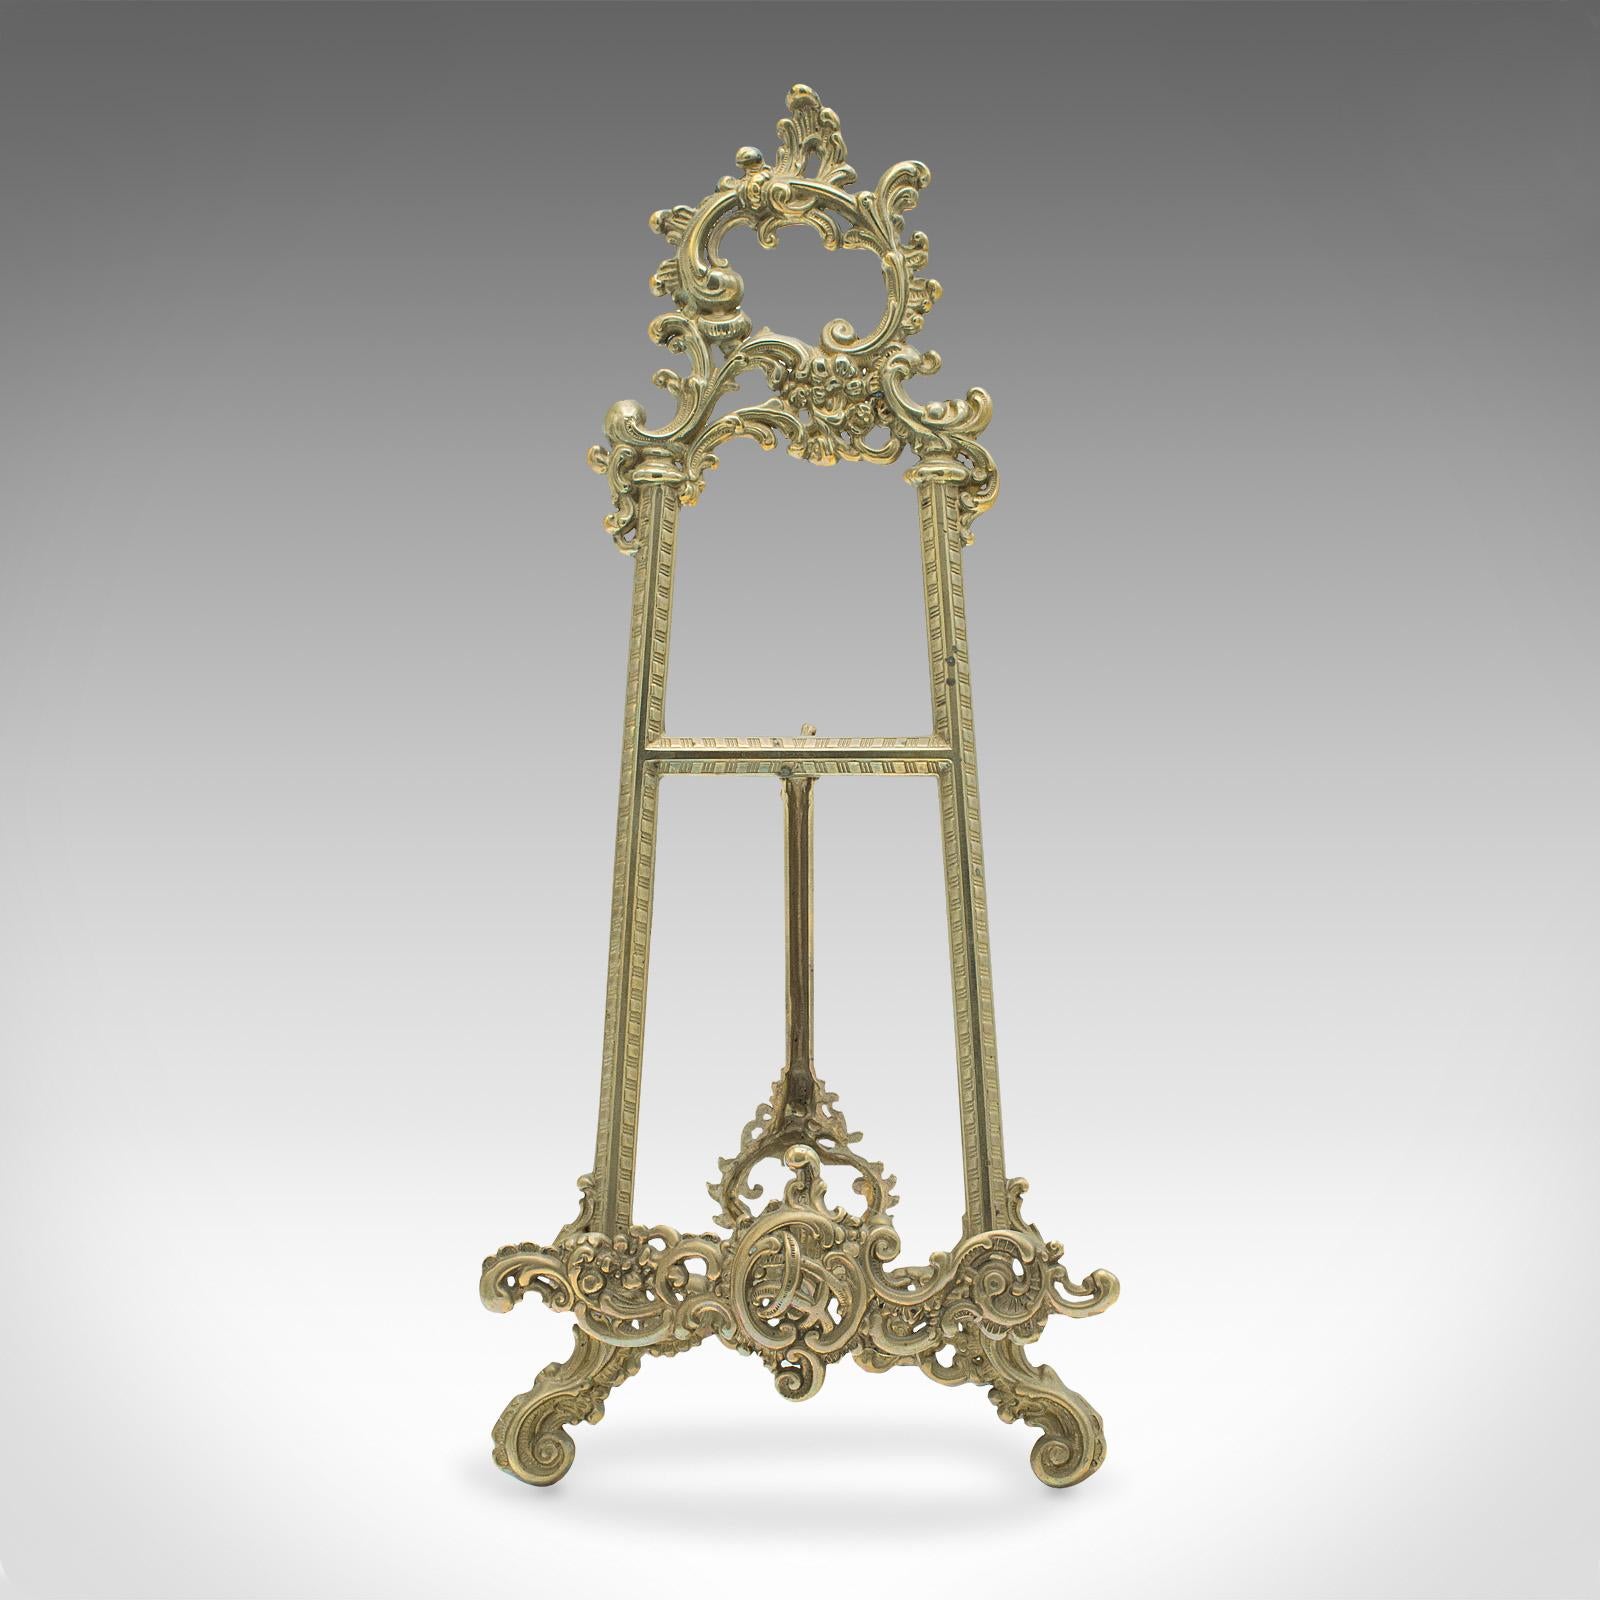 Art Nouveau Pair of Antique Decorative Picture Stands, English, Brass, Book Rest, Art Easel